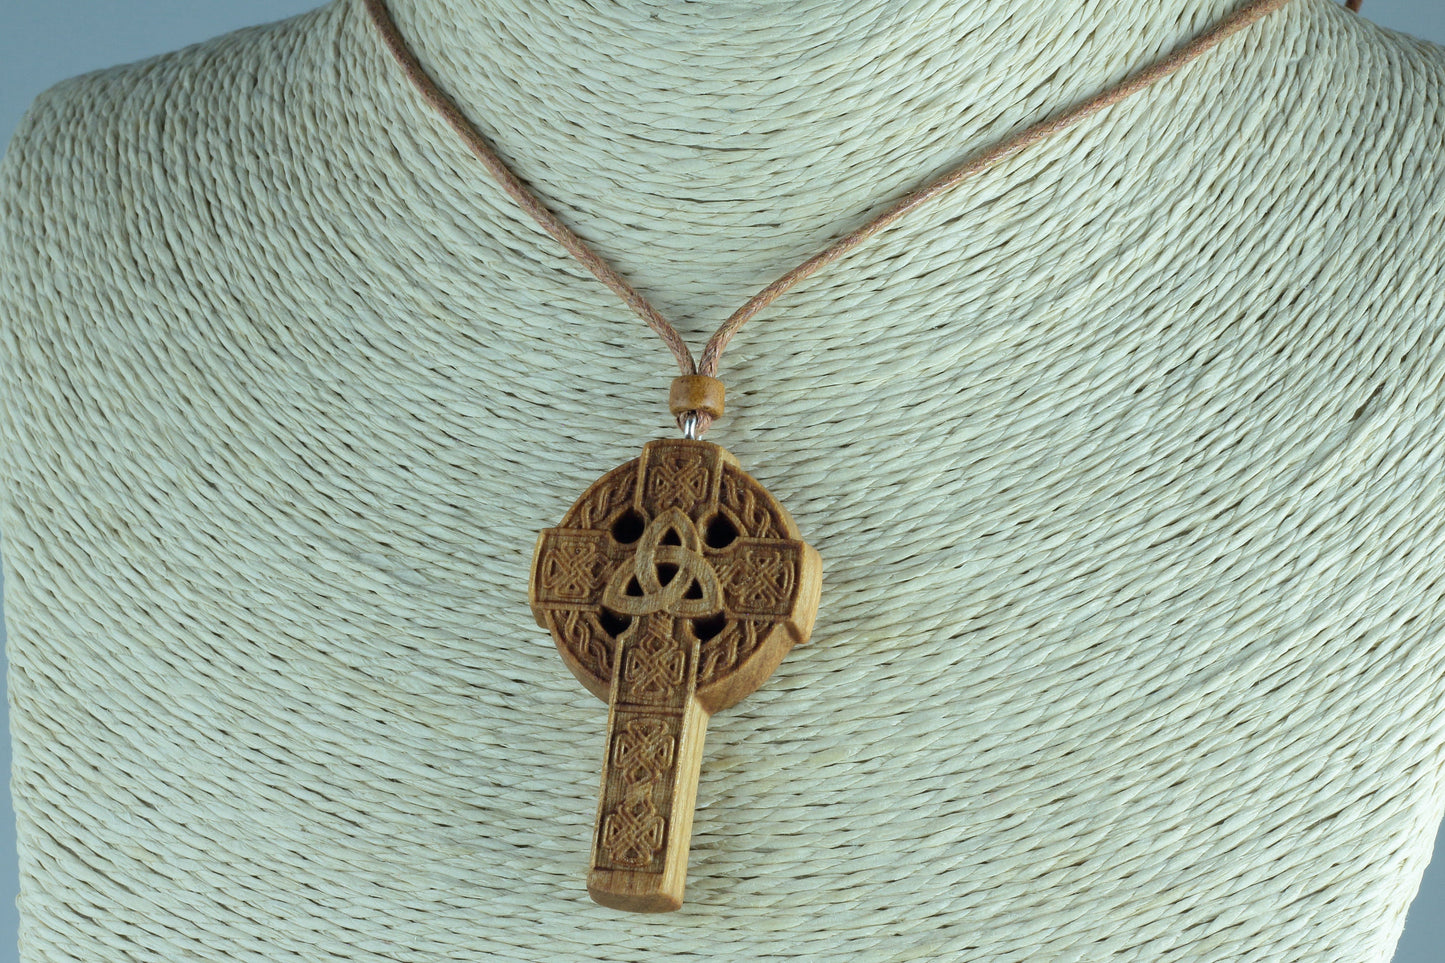 Celtic cross, Irish cross necklace, wooden necklace